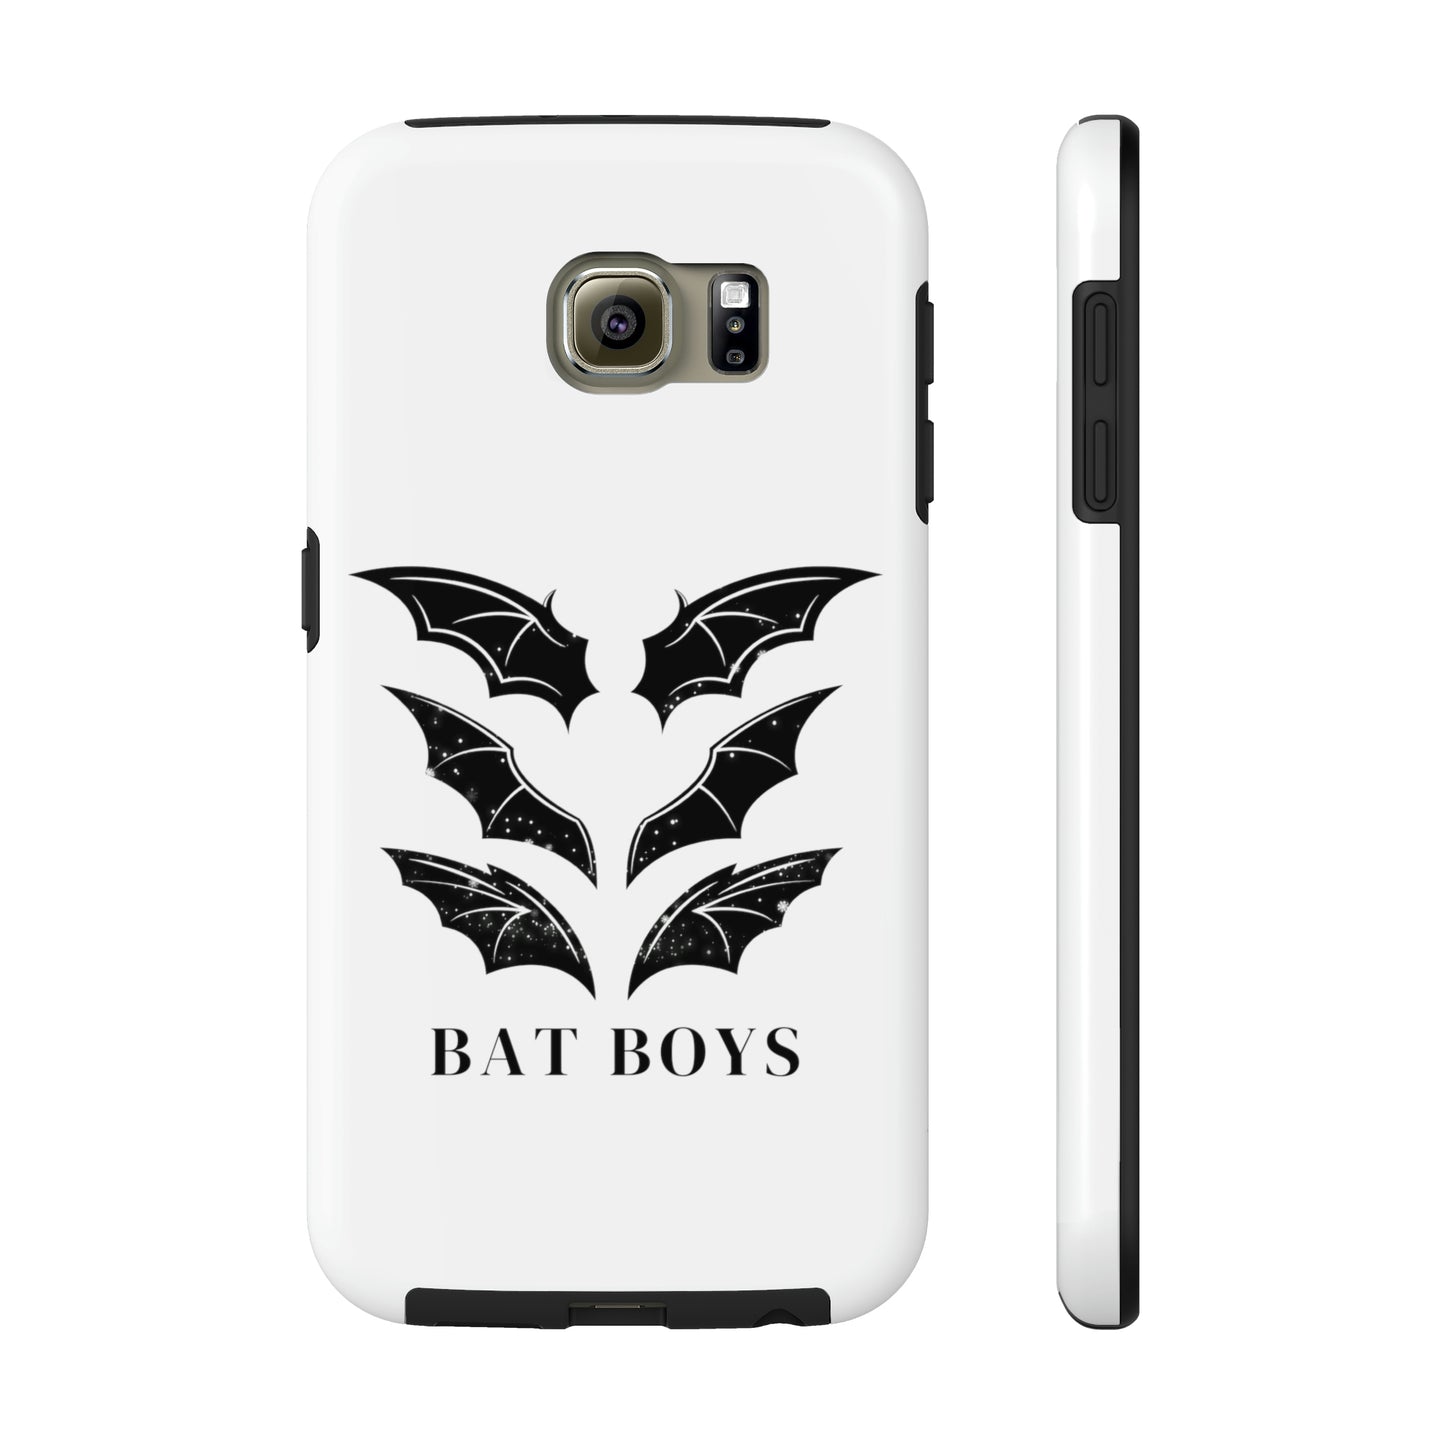 Bat Boys Phone Case